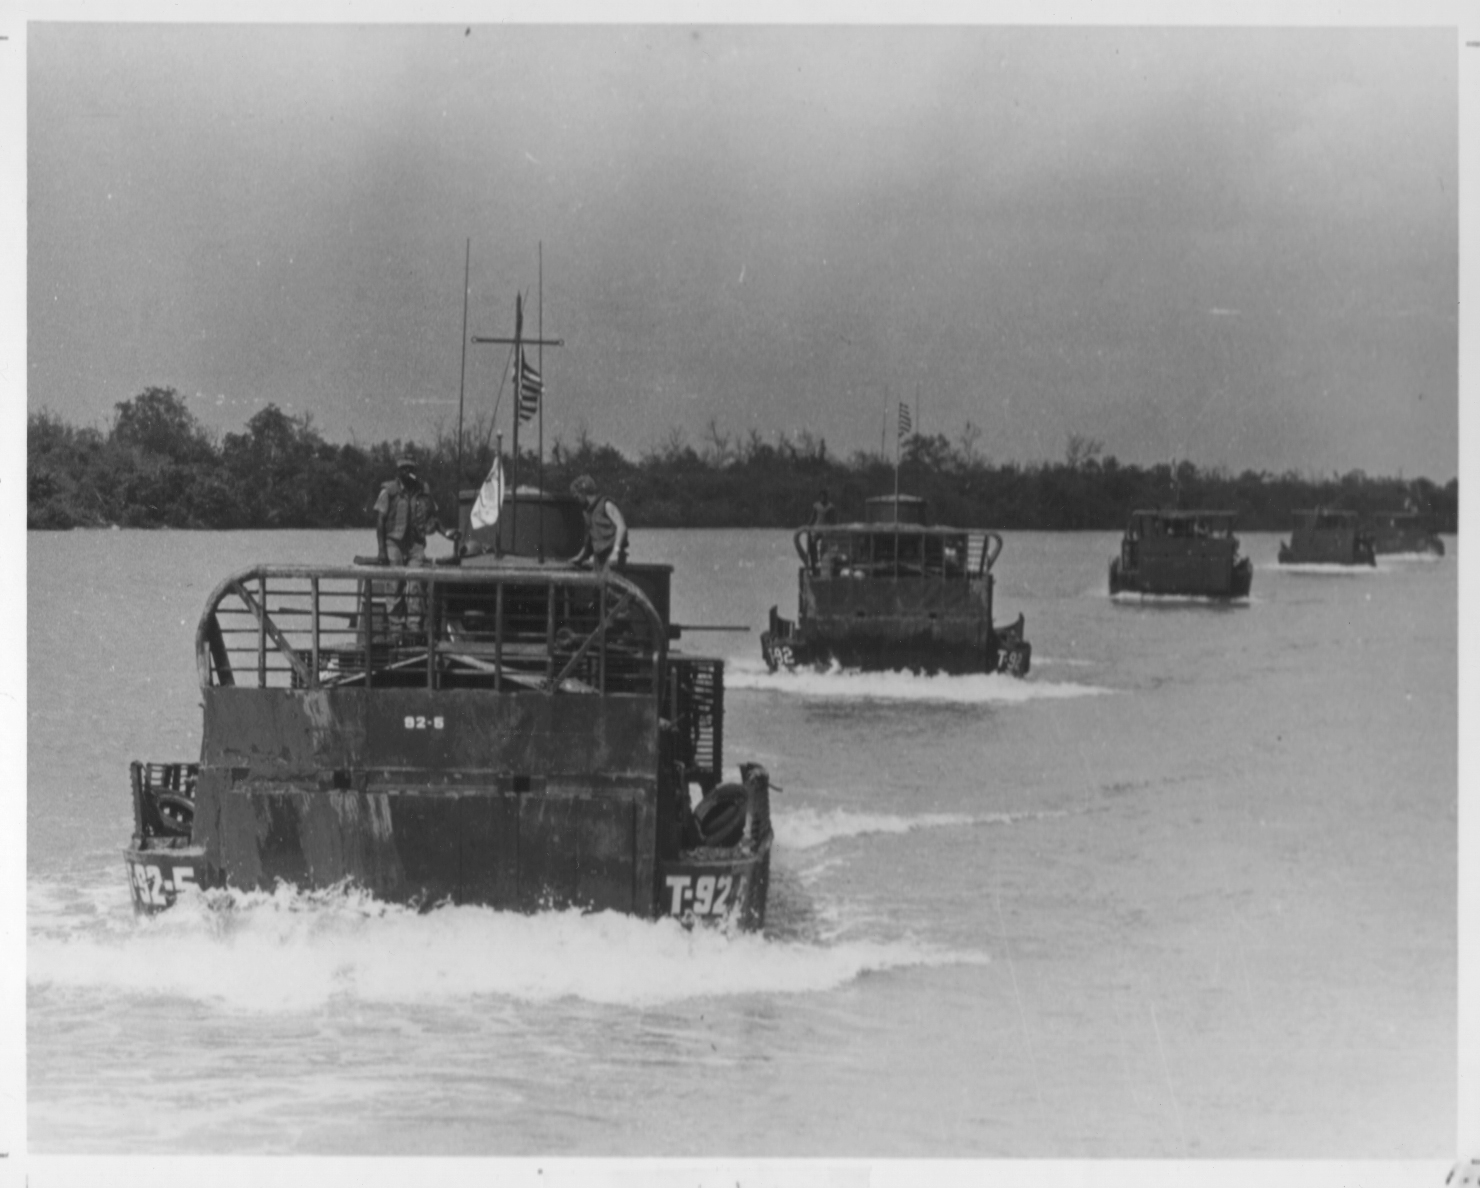 3rd Battalion 34th Field Artillery Patch Mobile Riverine Force Mekong Delta